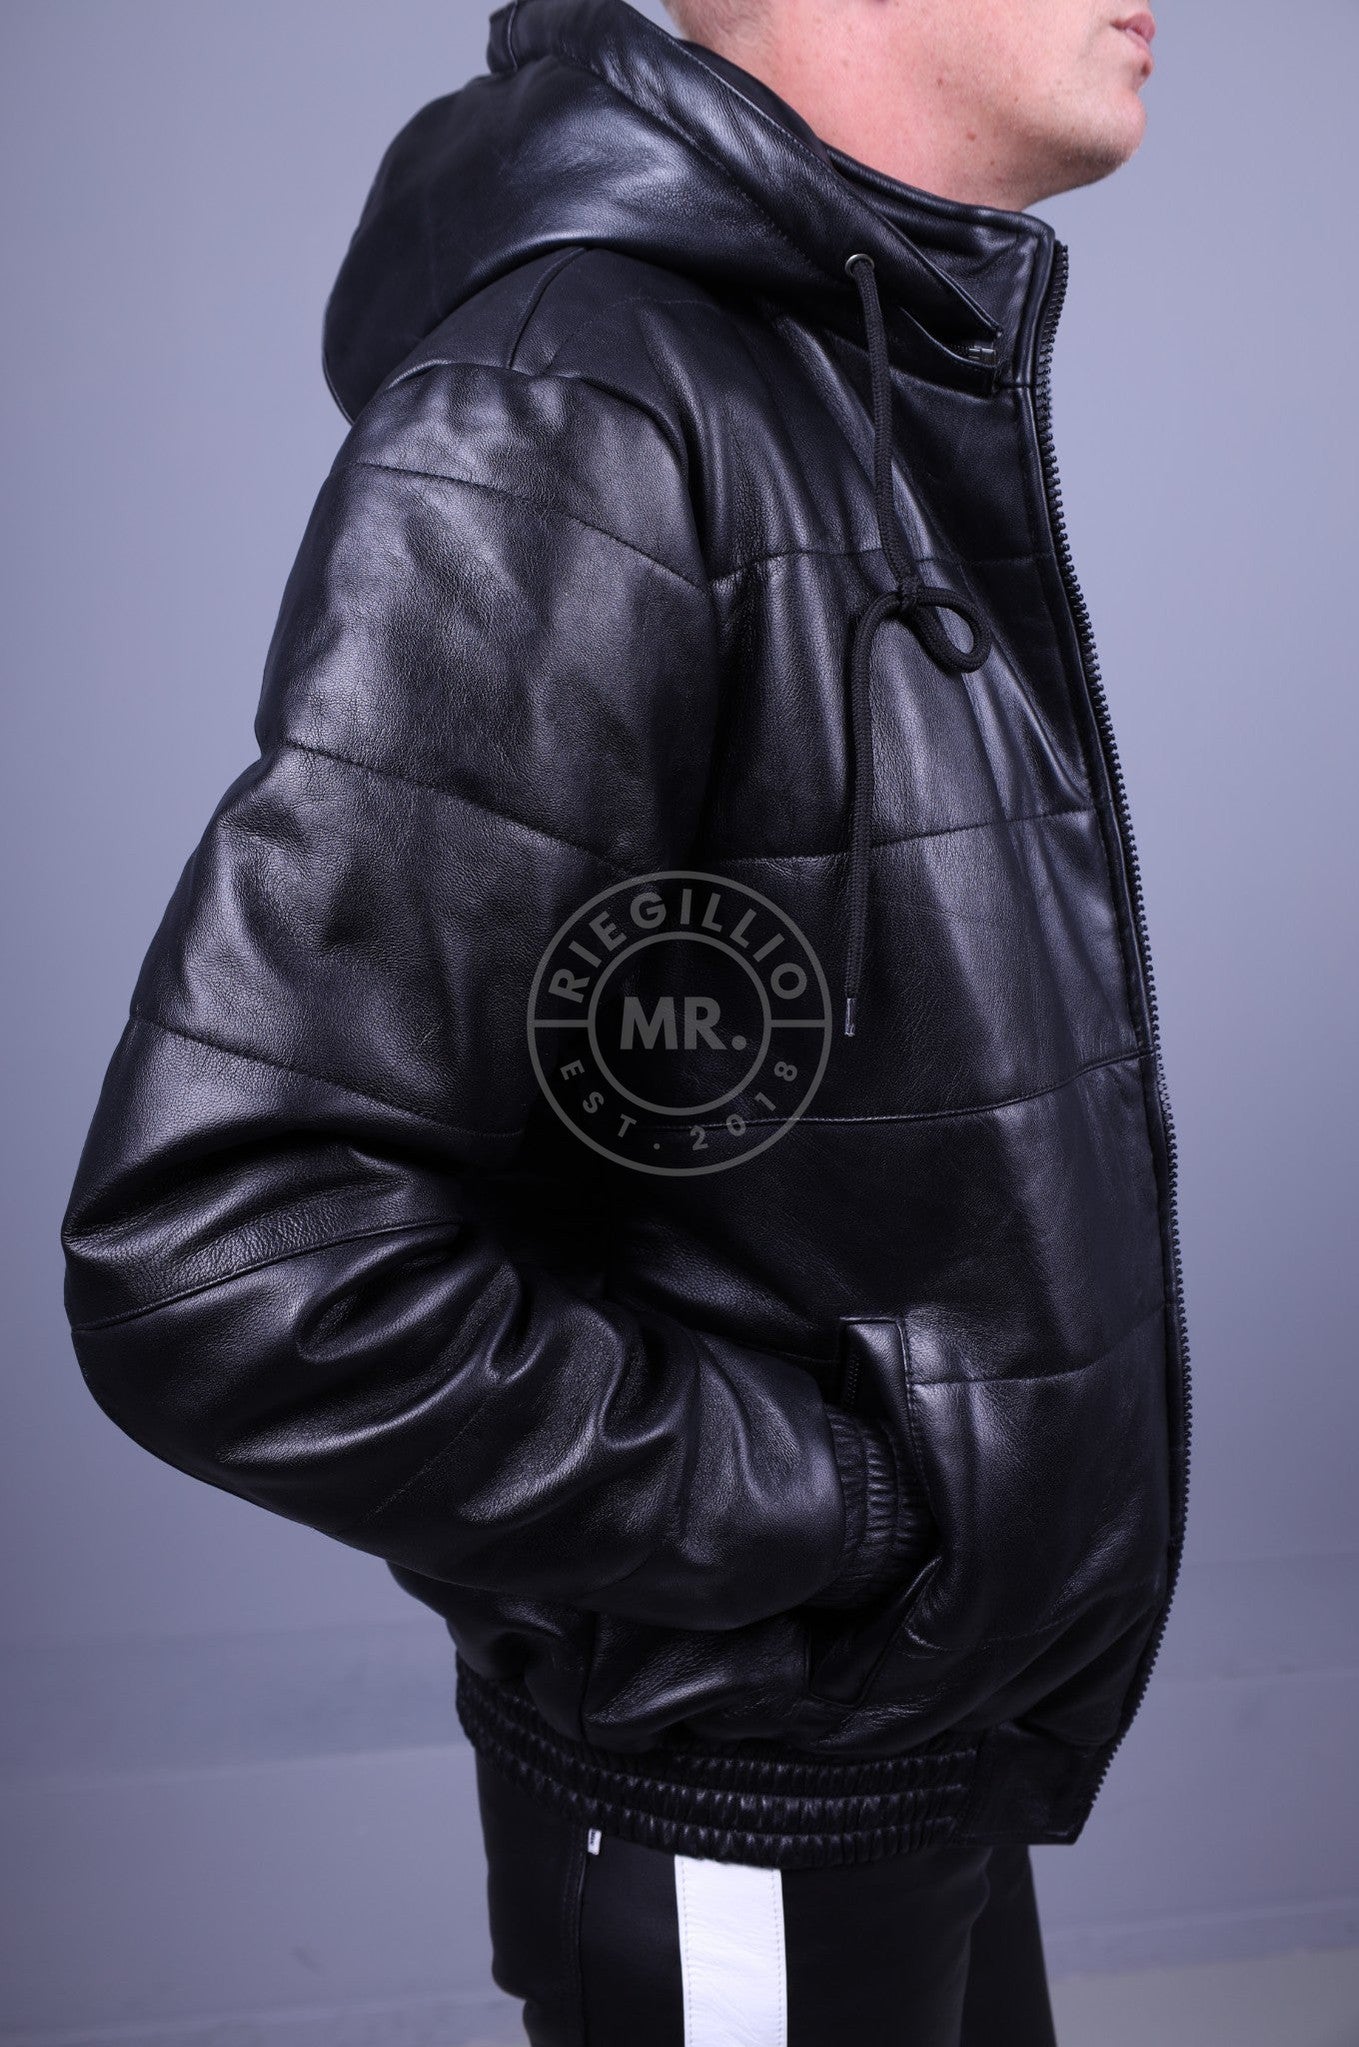 Black Leather Puffed Bomber Jacket-at MR. Riegillio